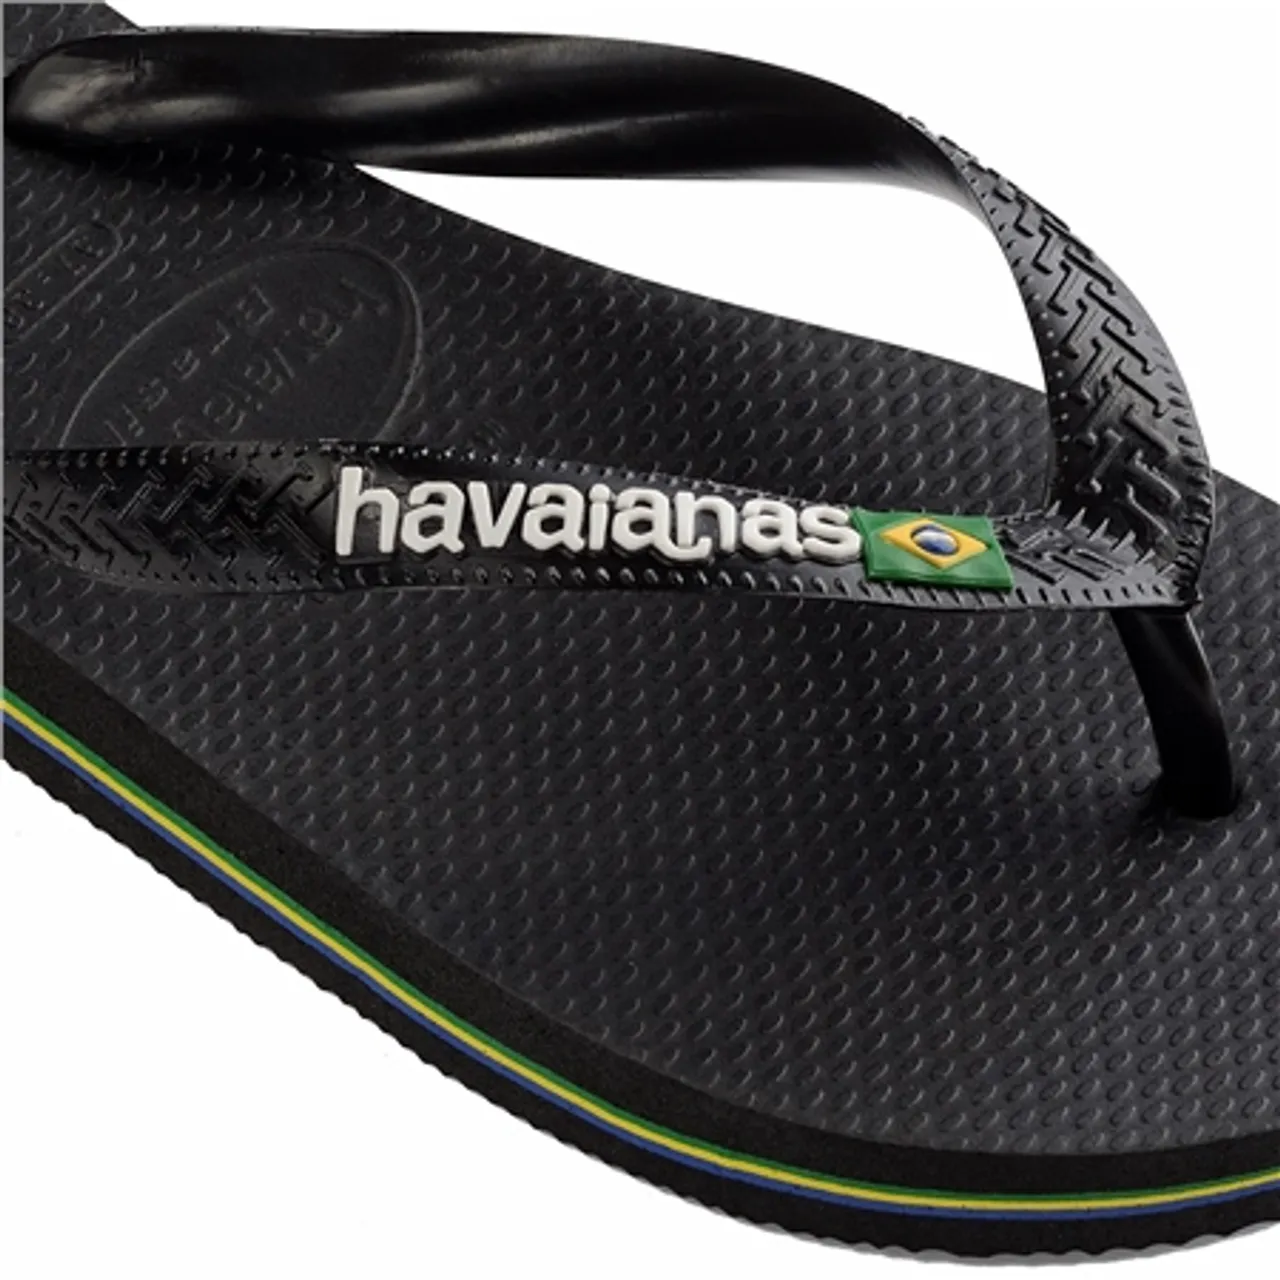 Havaianas Brazil Logo Flip Flops - Black - UK 6-7 (EU 39/40)